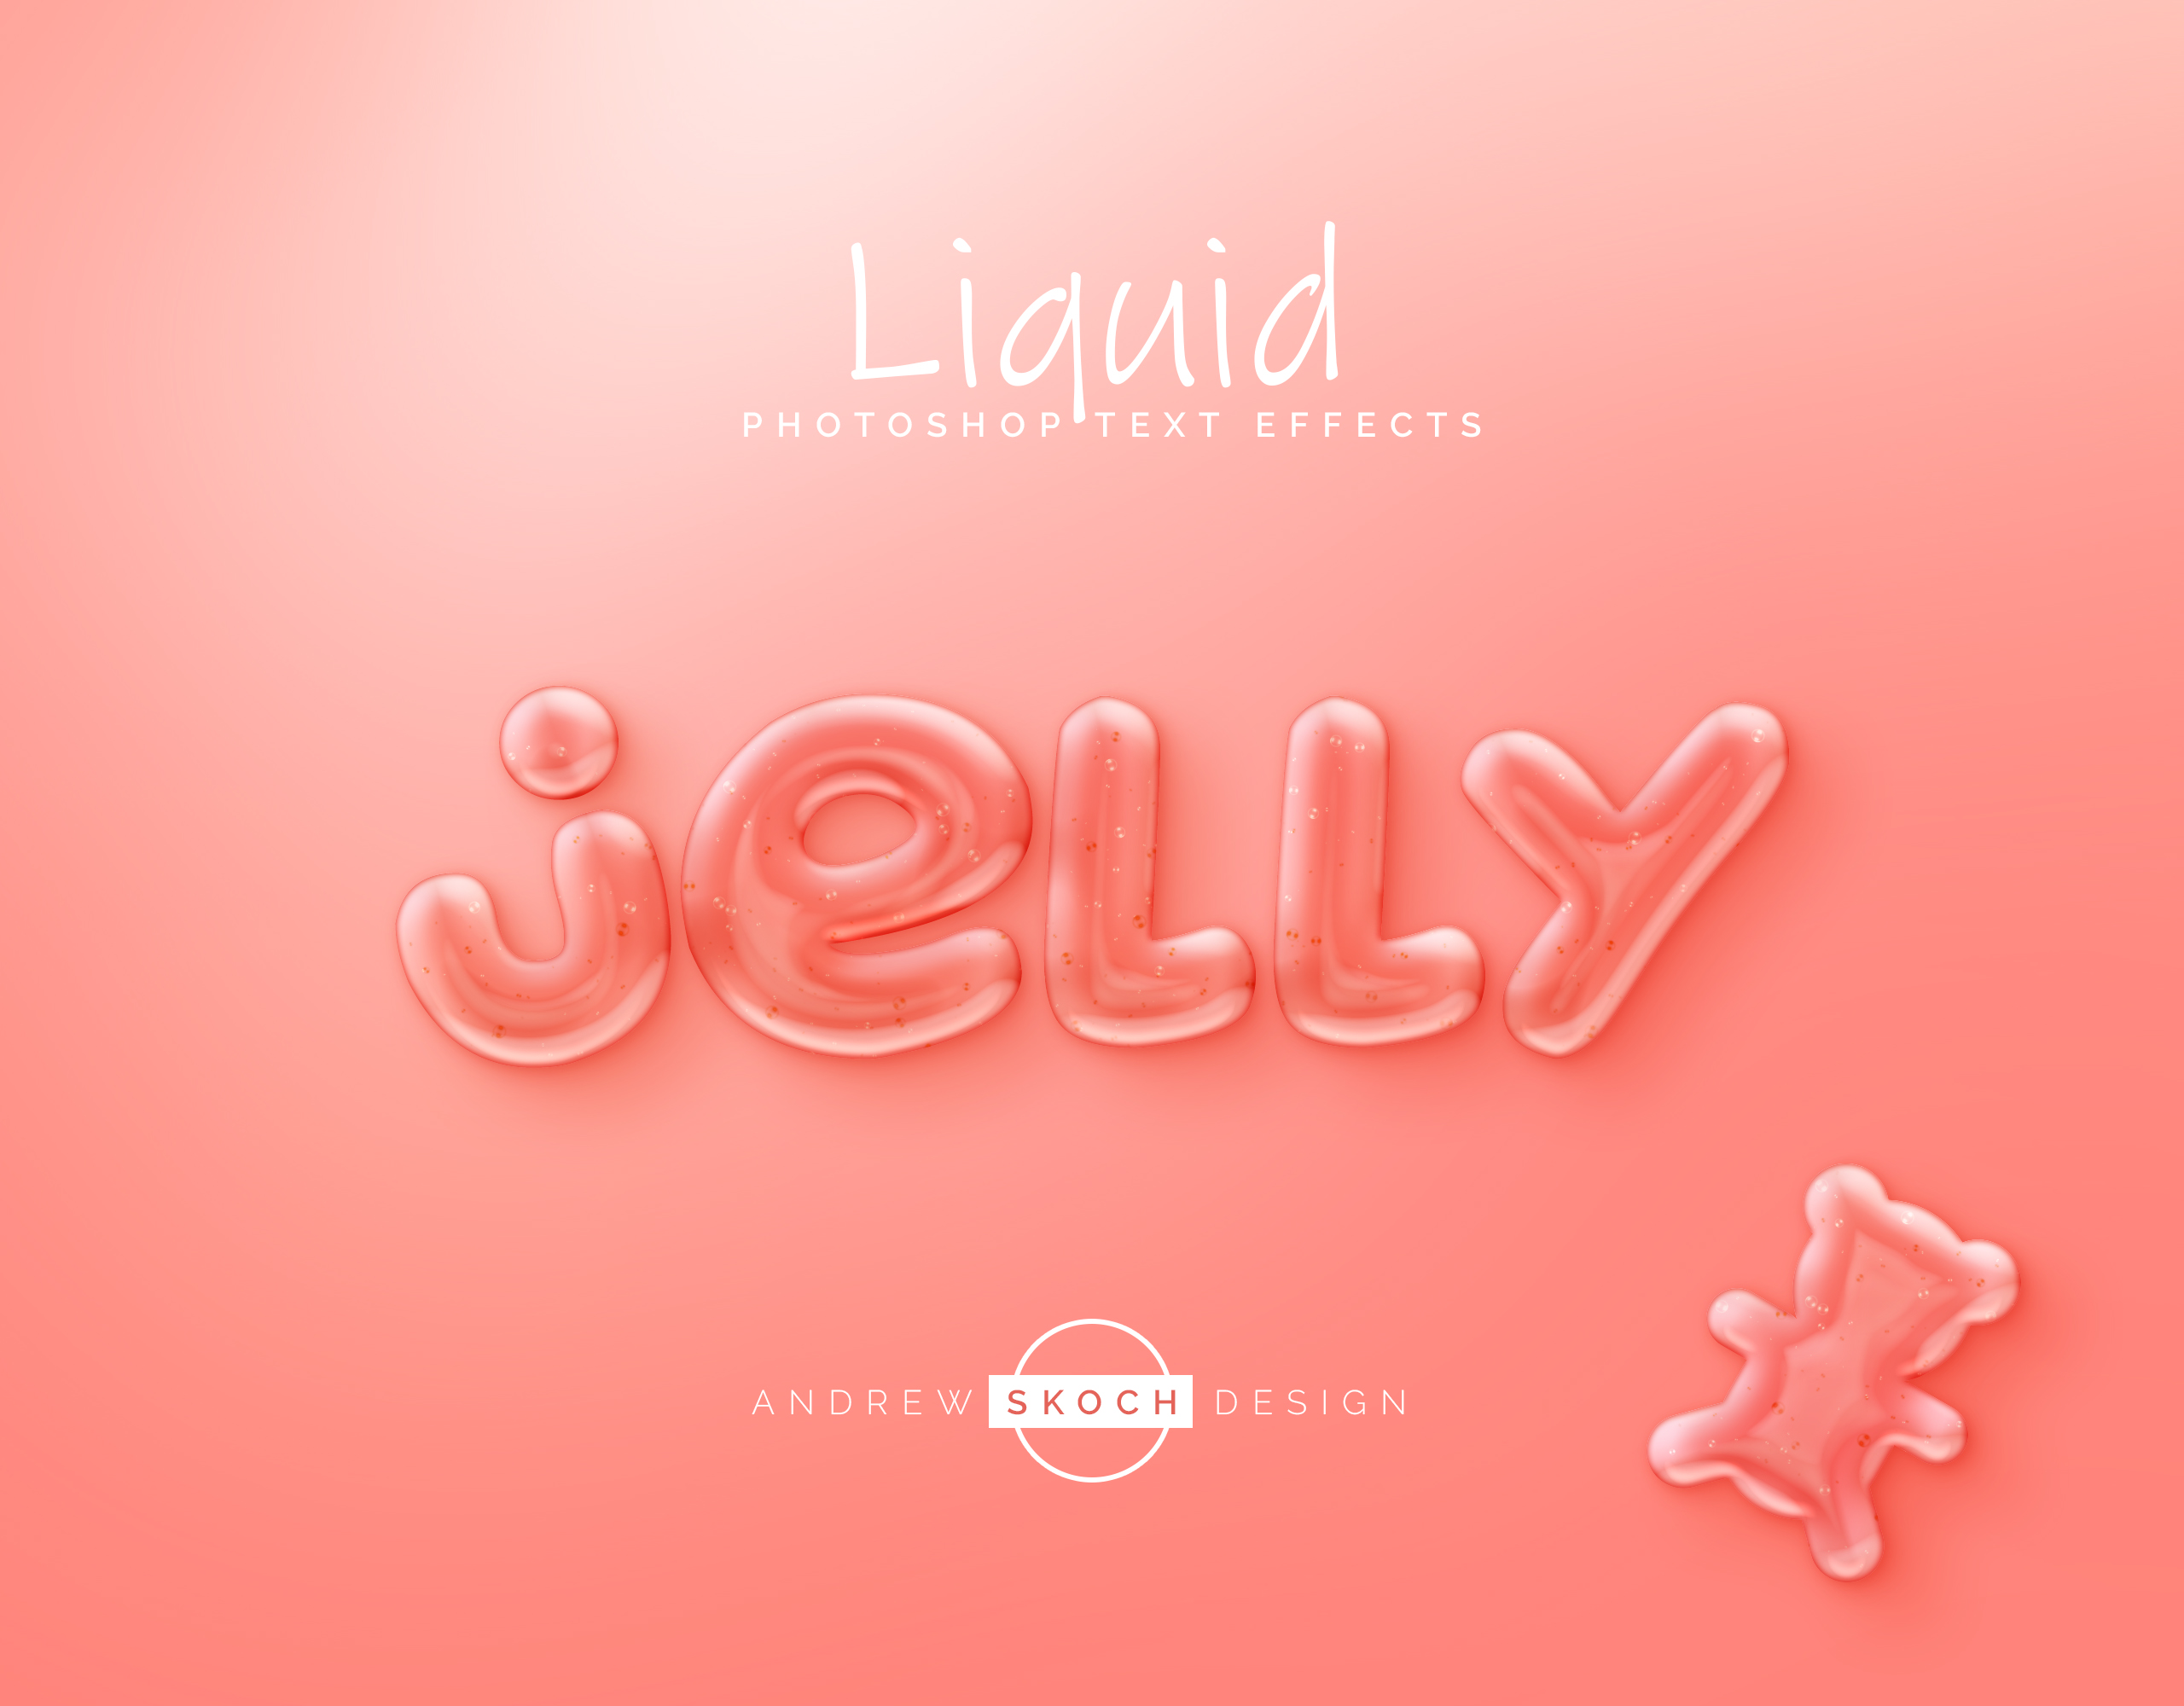 Liquid Tasty Text Effects by Sko4 | GraphicRiver